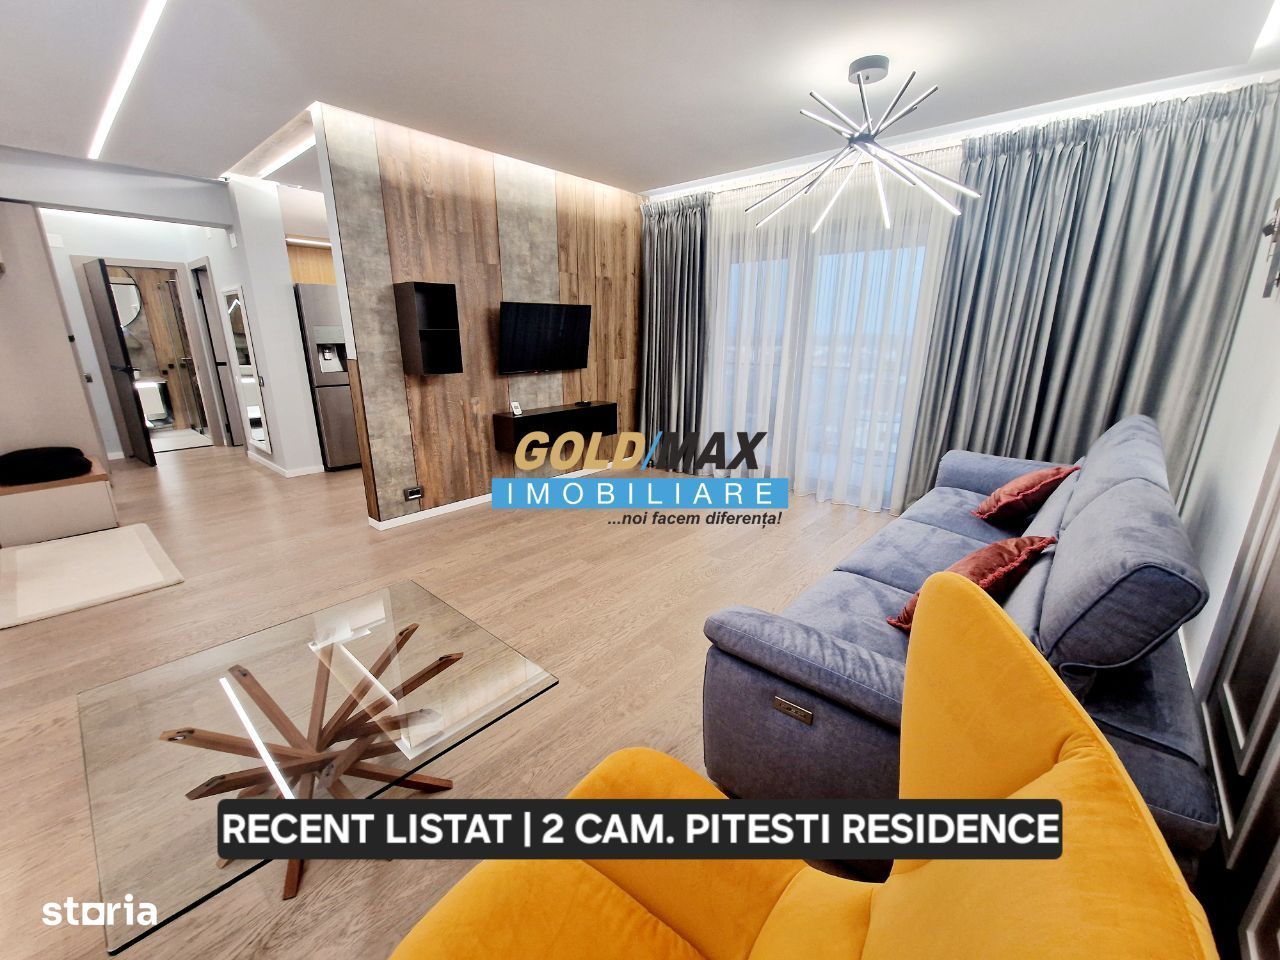 Apartament 2 camere | Pitesti Residence | goldmax.ro